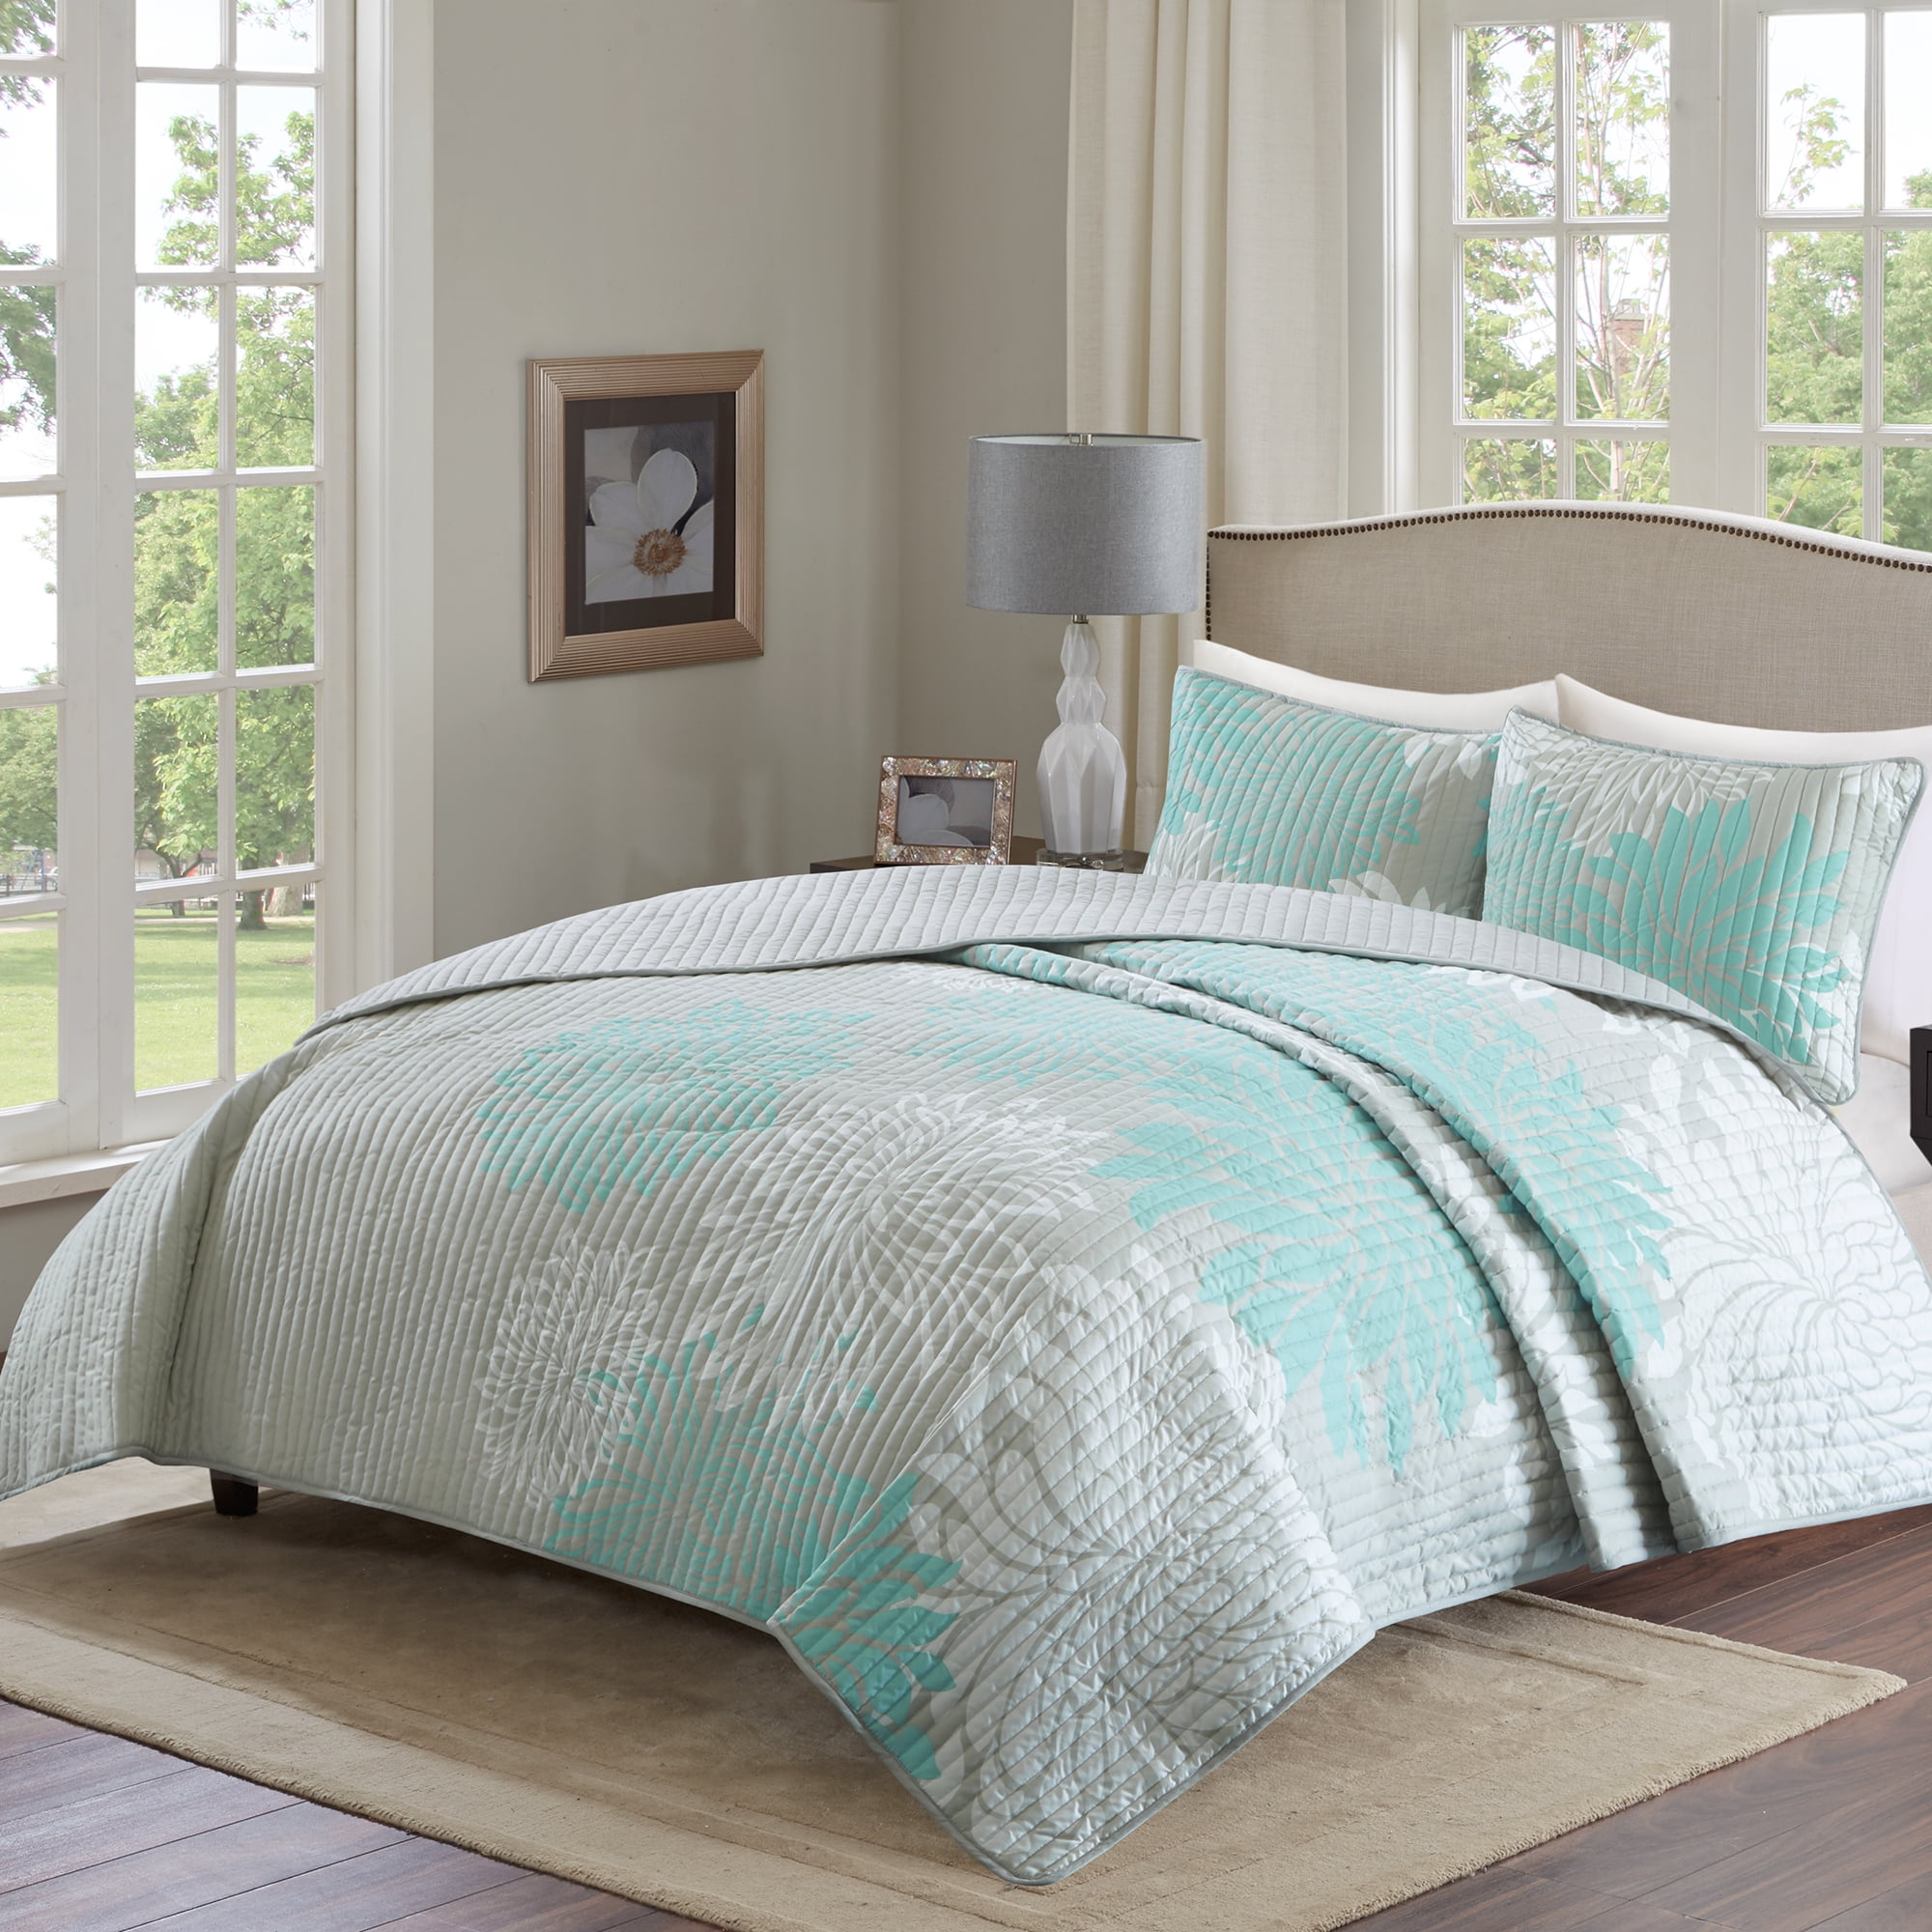 Details about   Comfort Spaces Enya Comforter Set-Modern Floral Design All Season Down Bedding, 